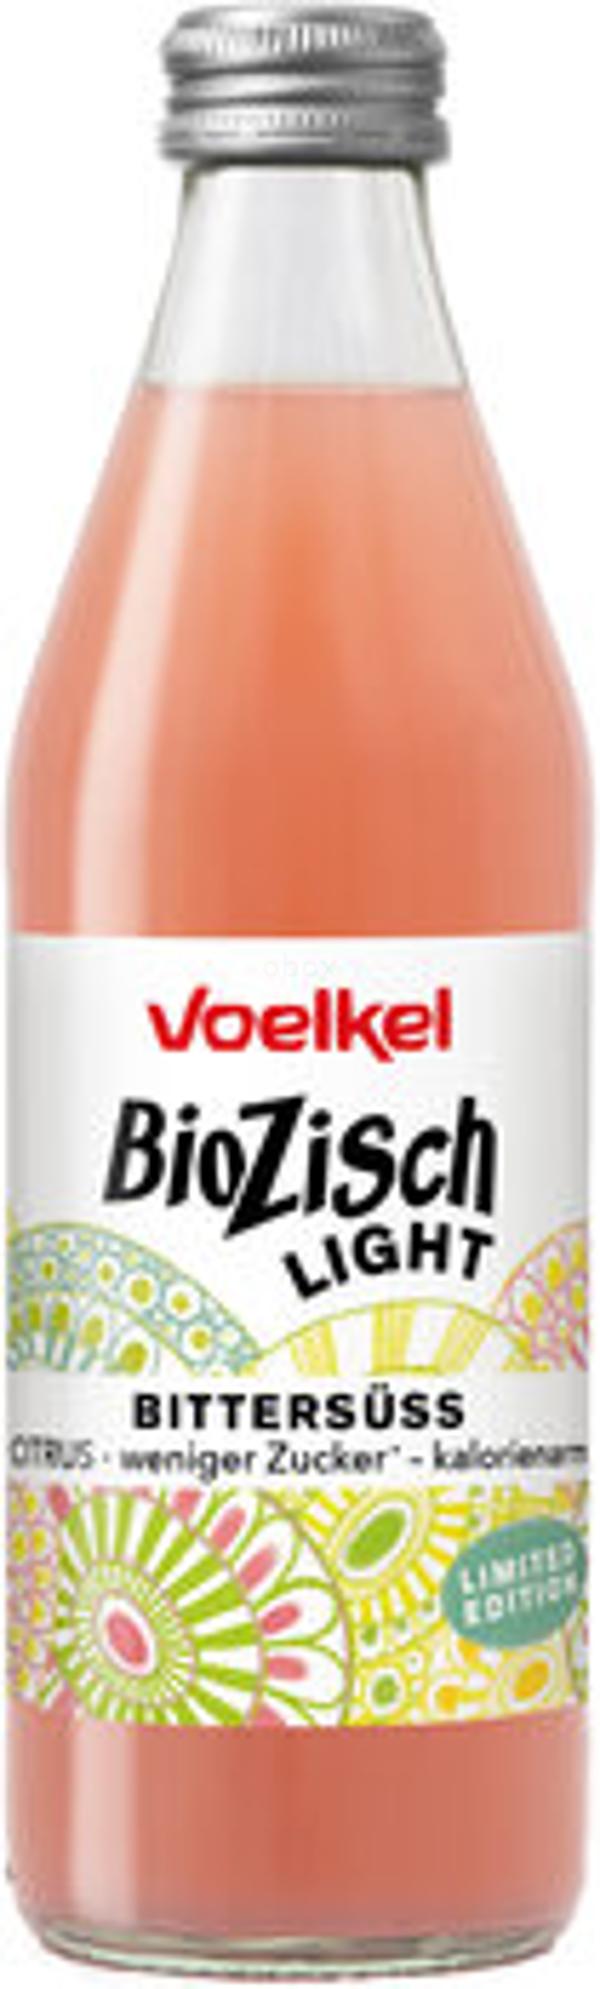 Produktfoto zu BioZisch Light Bittersüss, 0,33 l